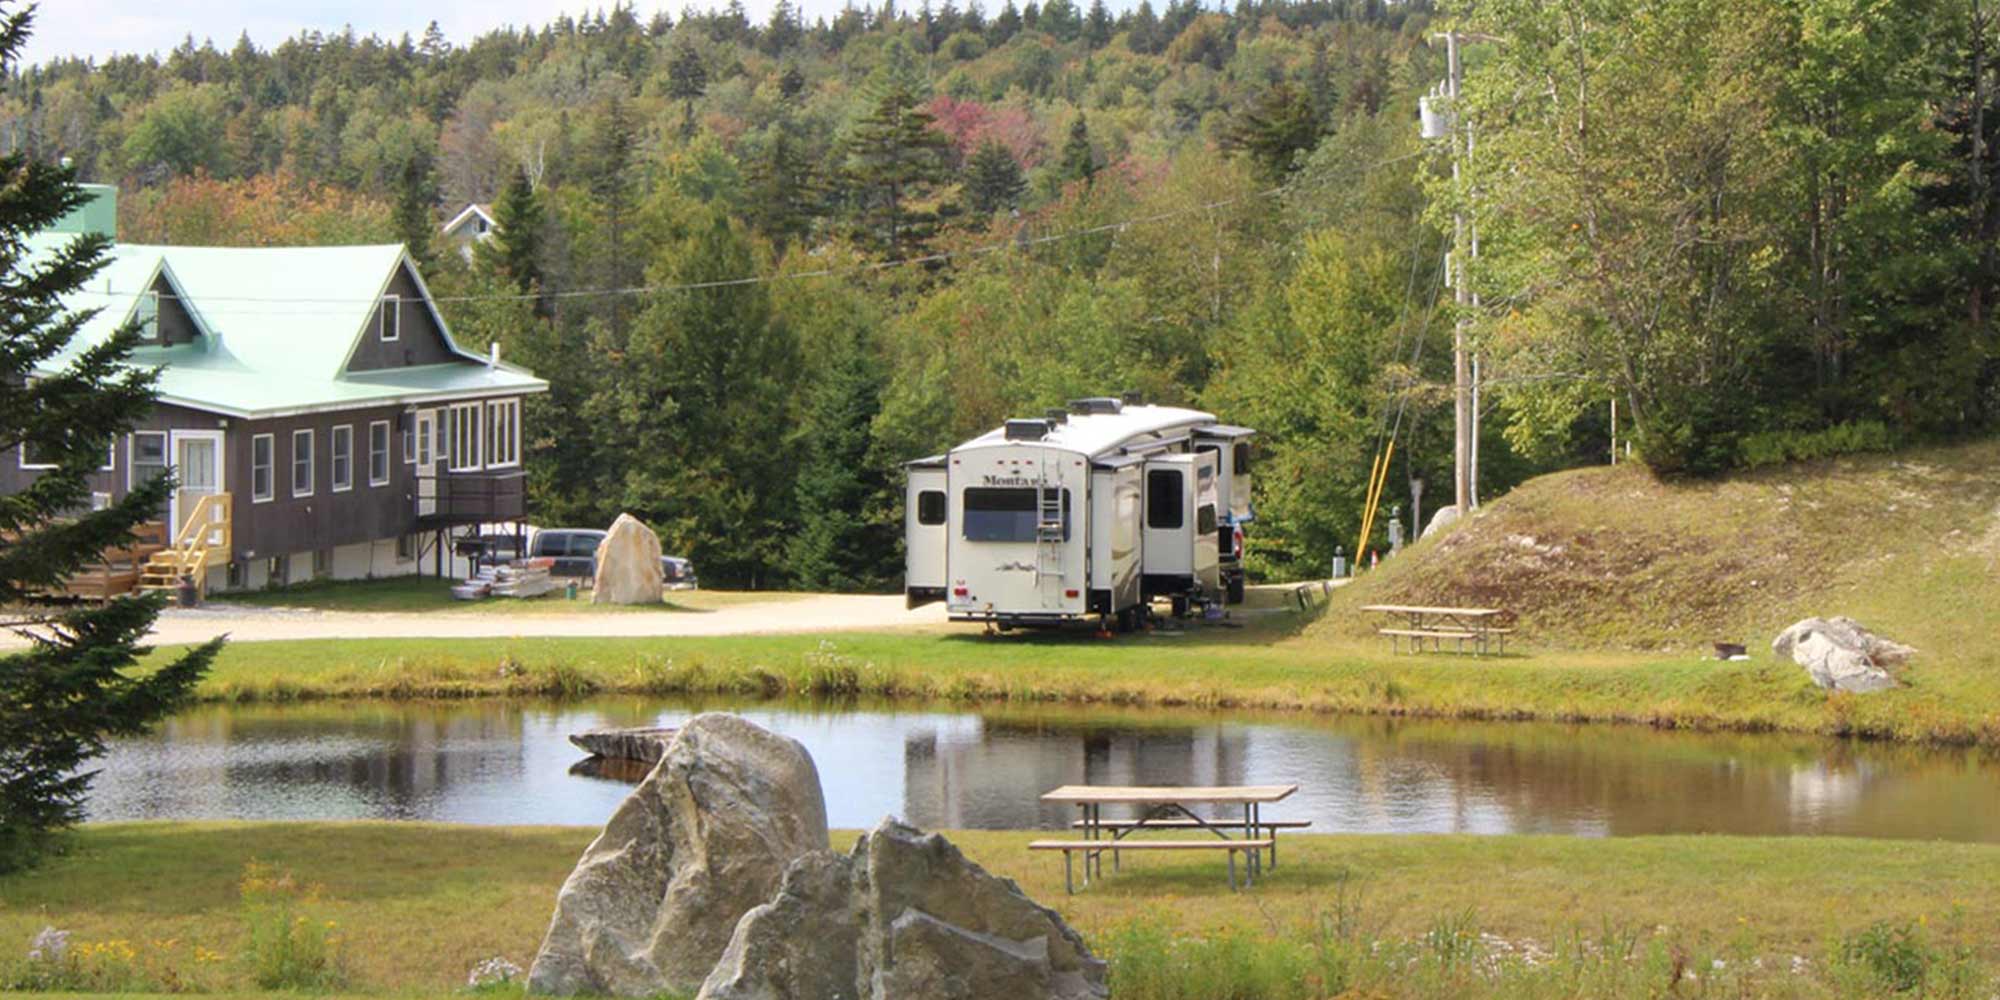 An RV parked near a lake during summer